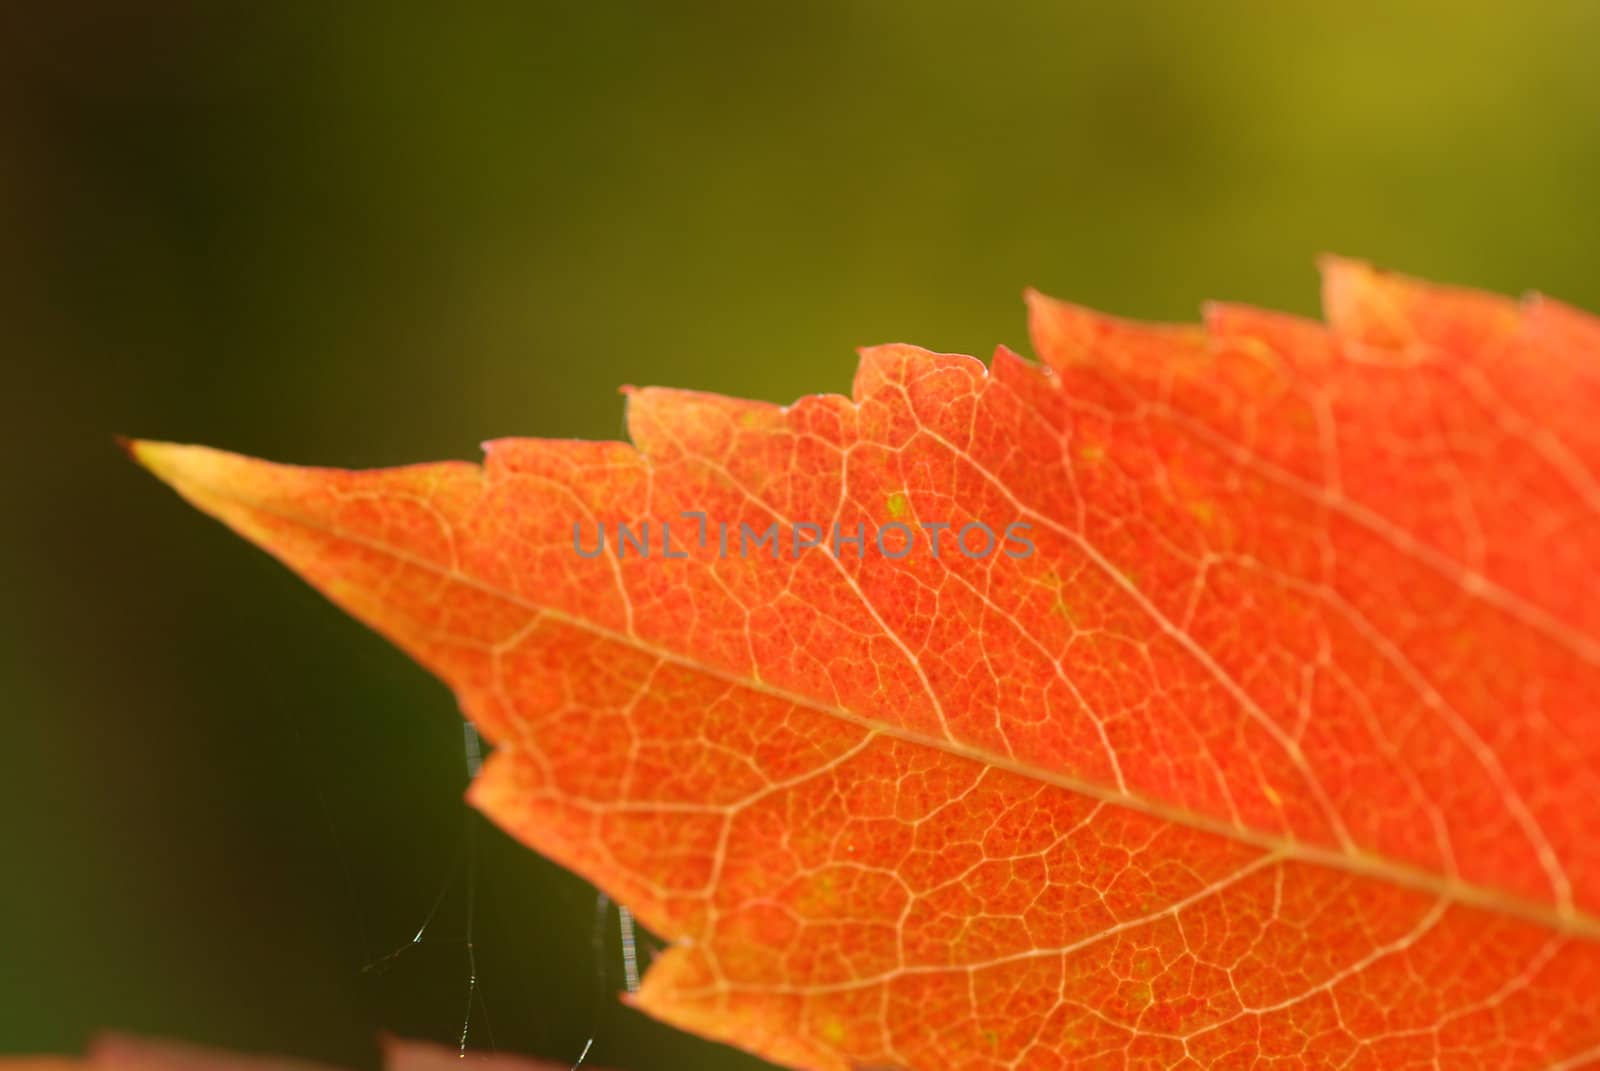 Autumn leaves on the background of green. by wojciechkozlowski